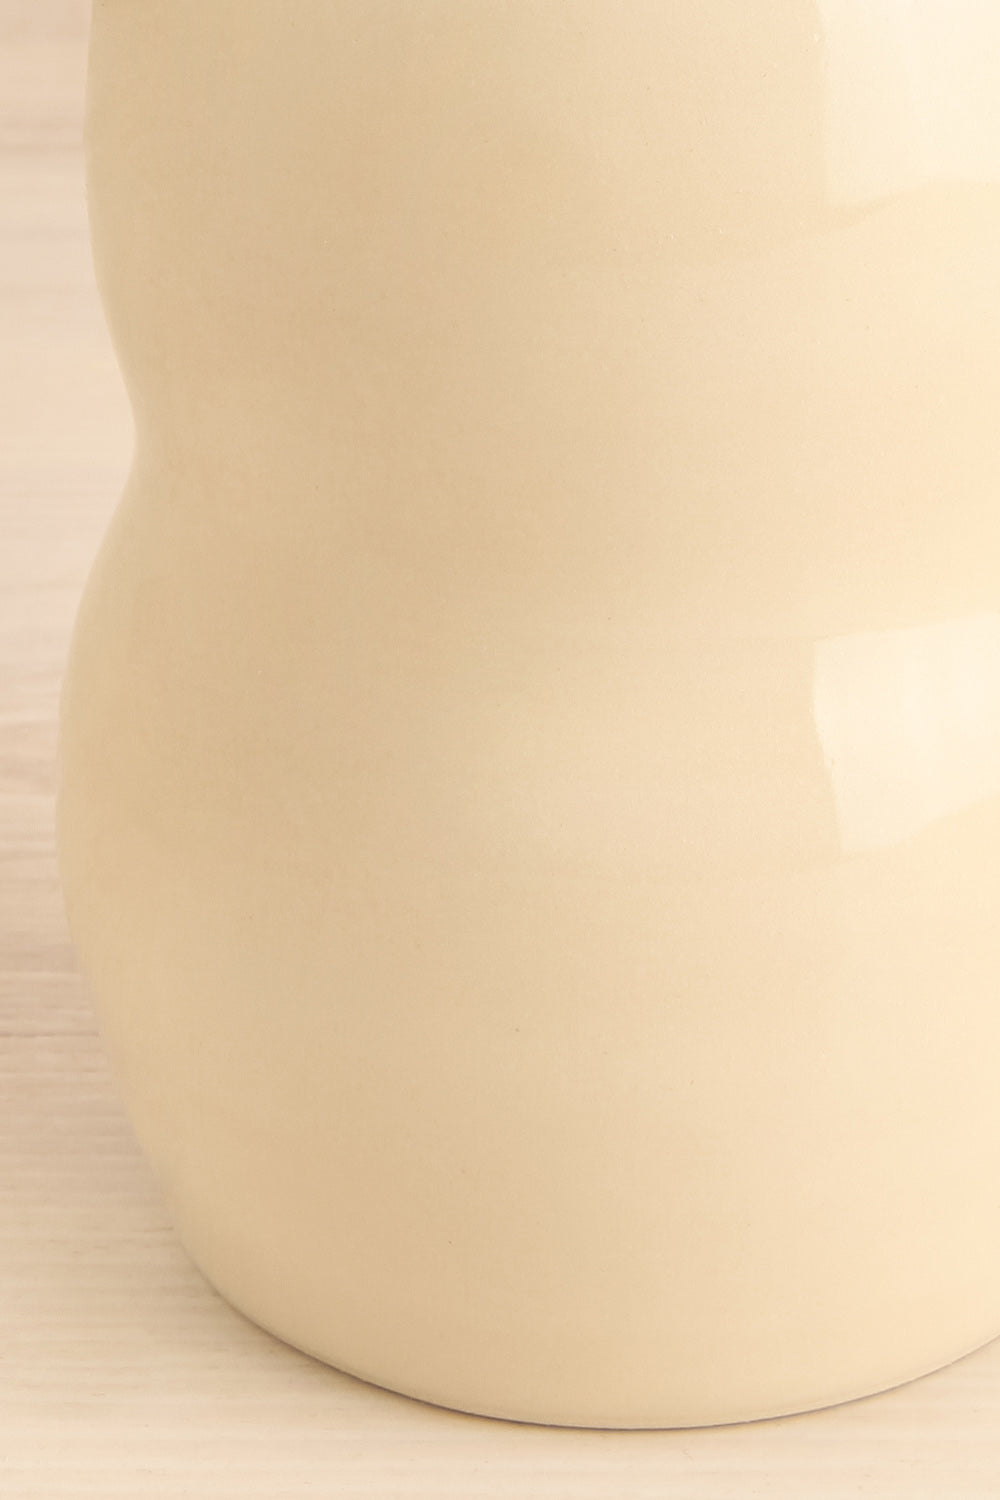 Monokiini Curved Ceramic Vase | Maison garçonne details